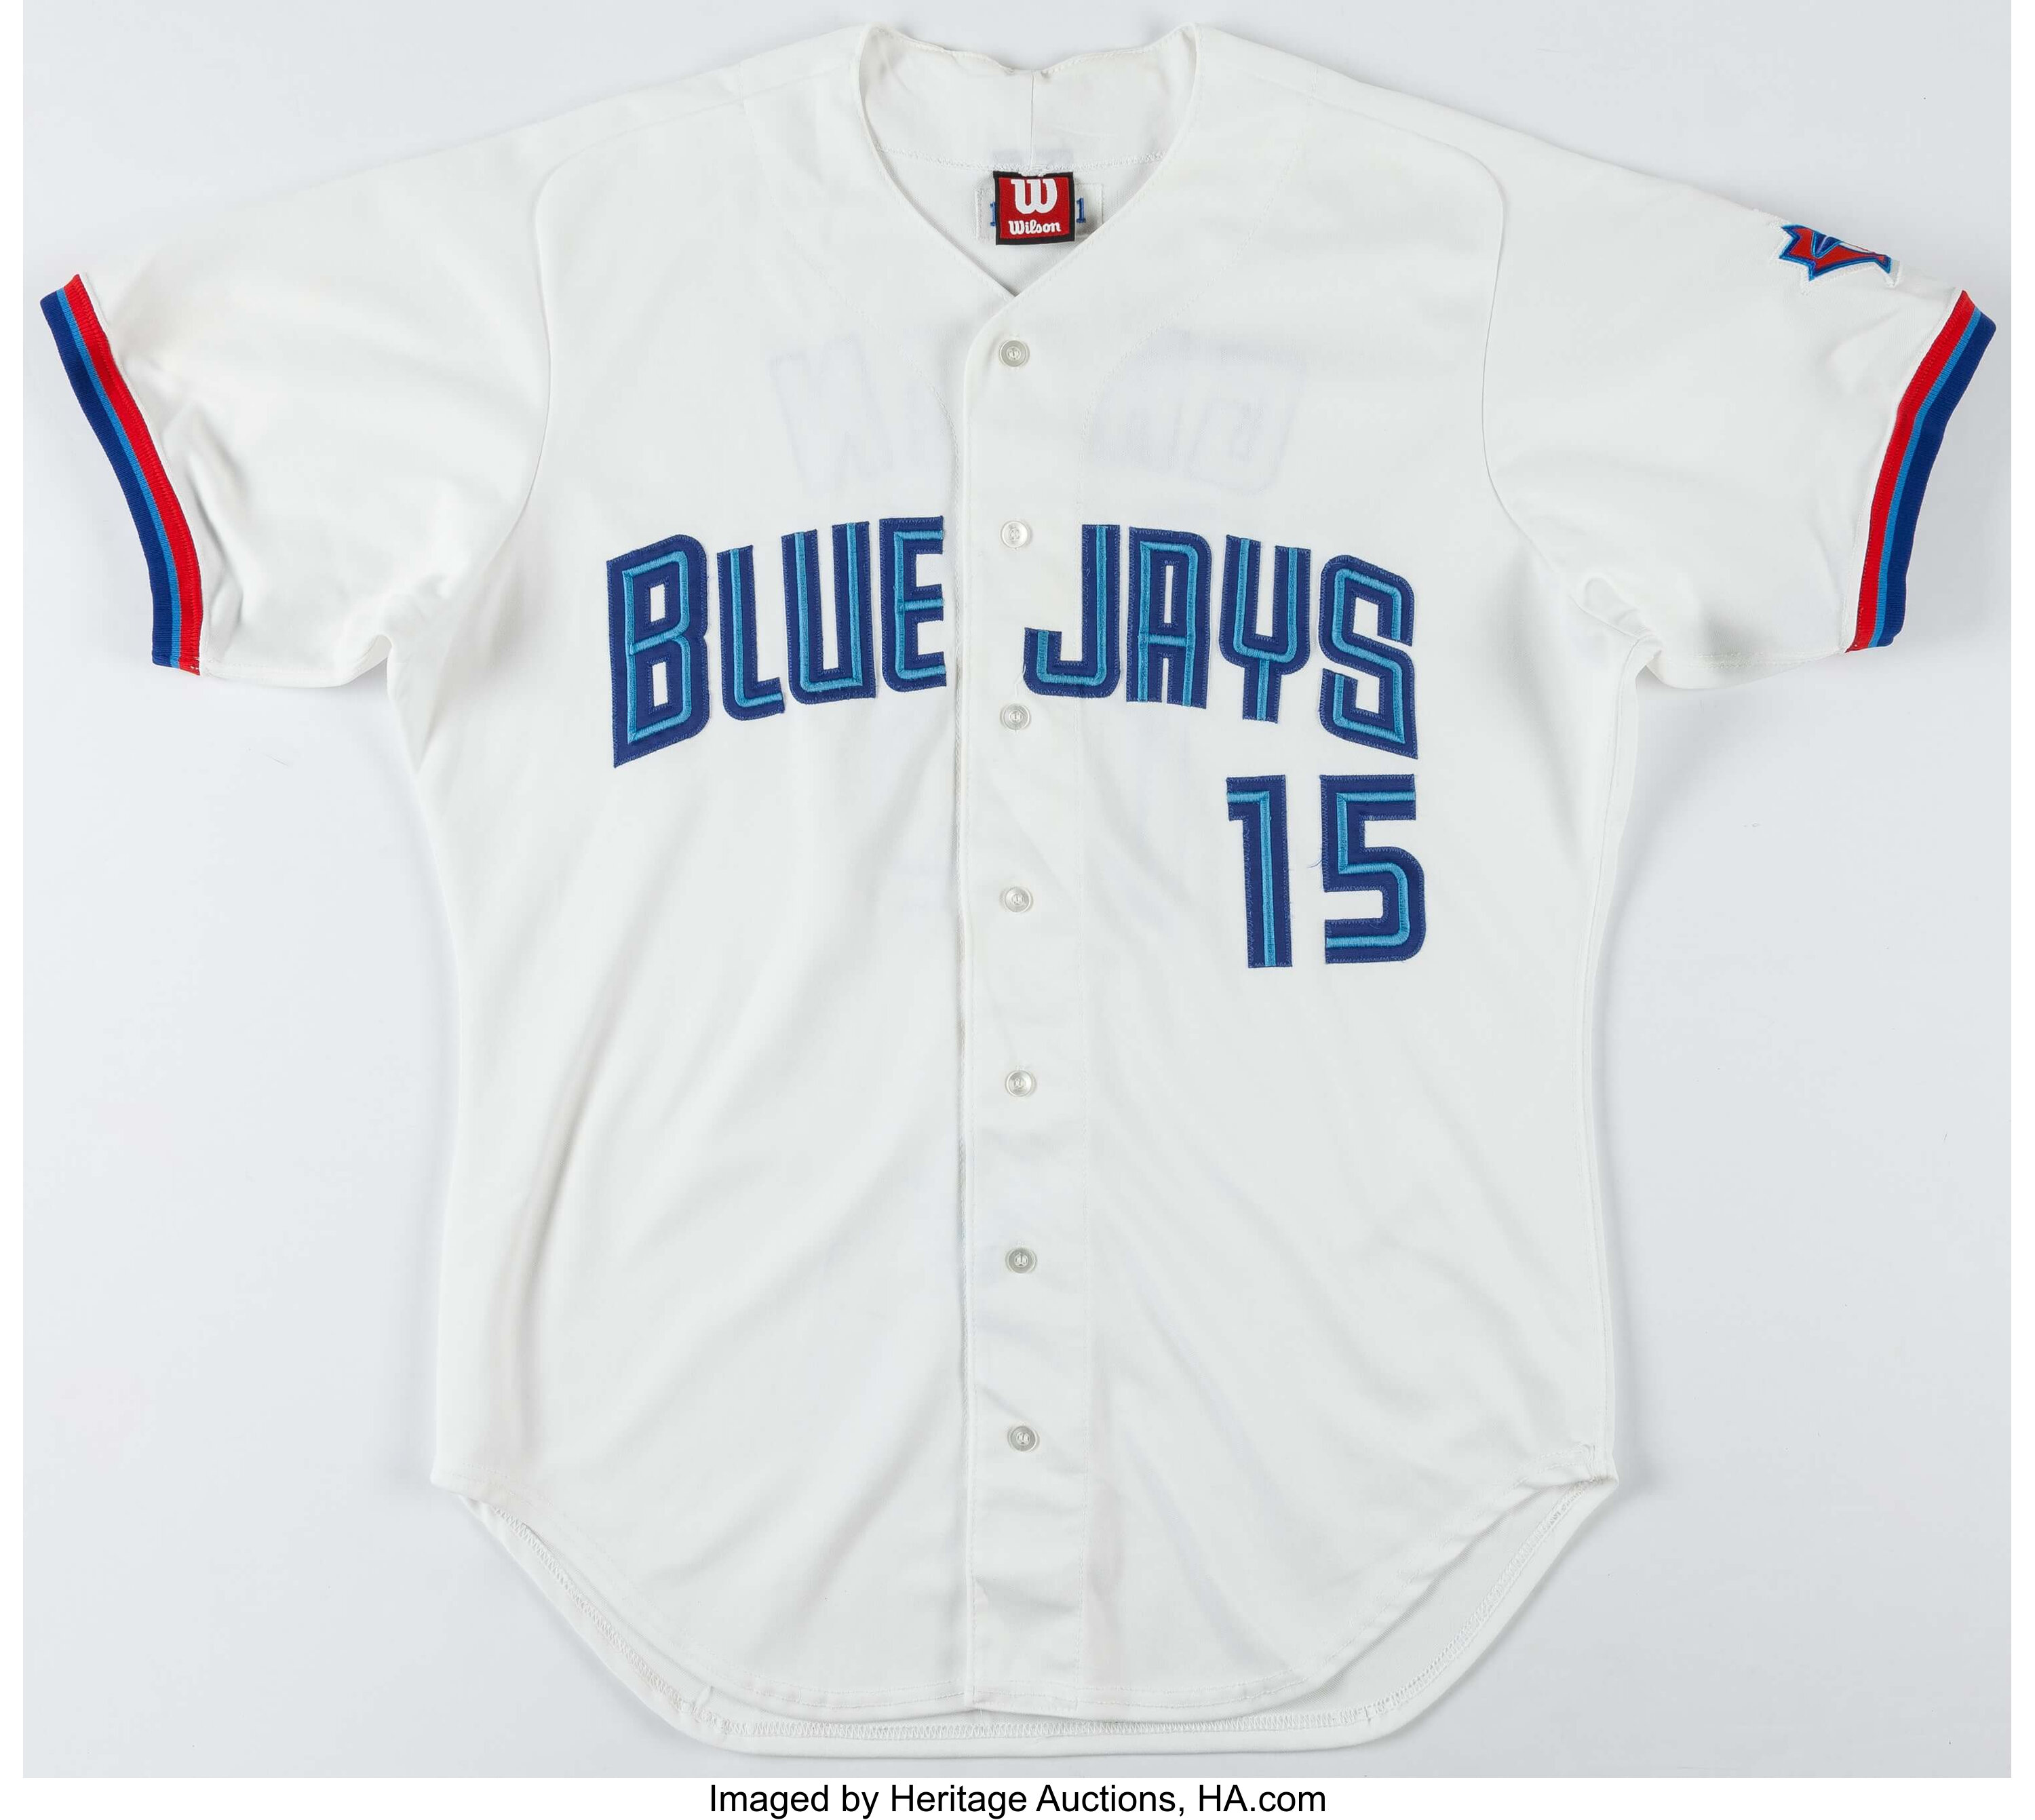  1998 Topps # 76 Shawn Green Toronto Blue Jays (Baseball Card)  NM/MT Blue Jays : Collectibles & Fine Art